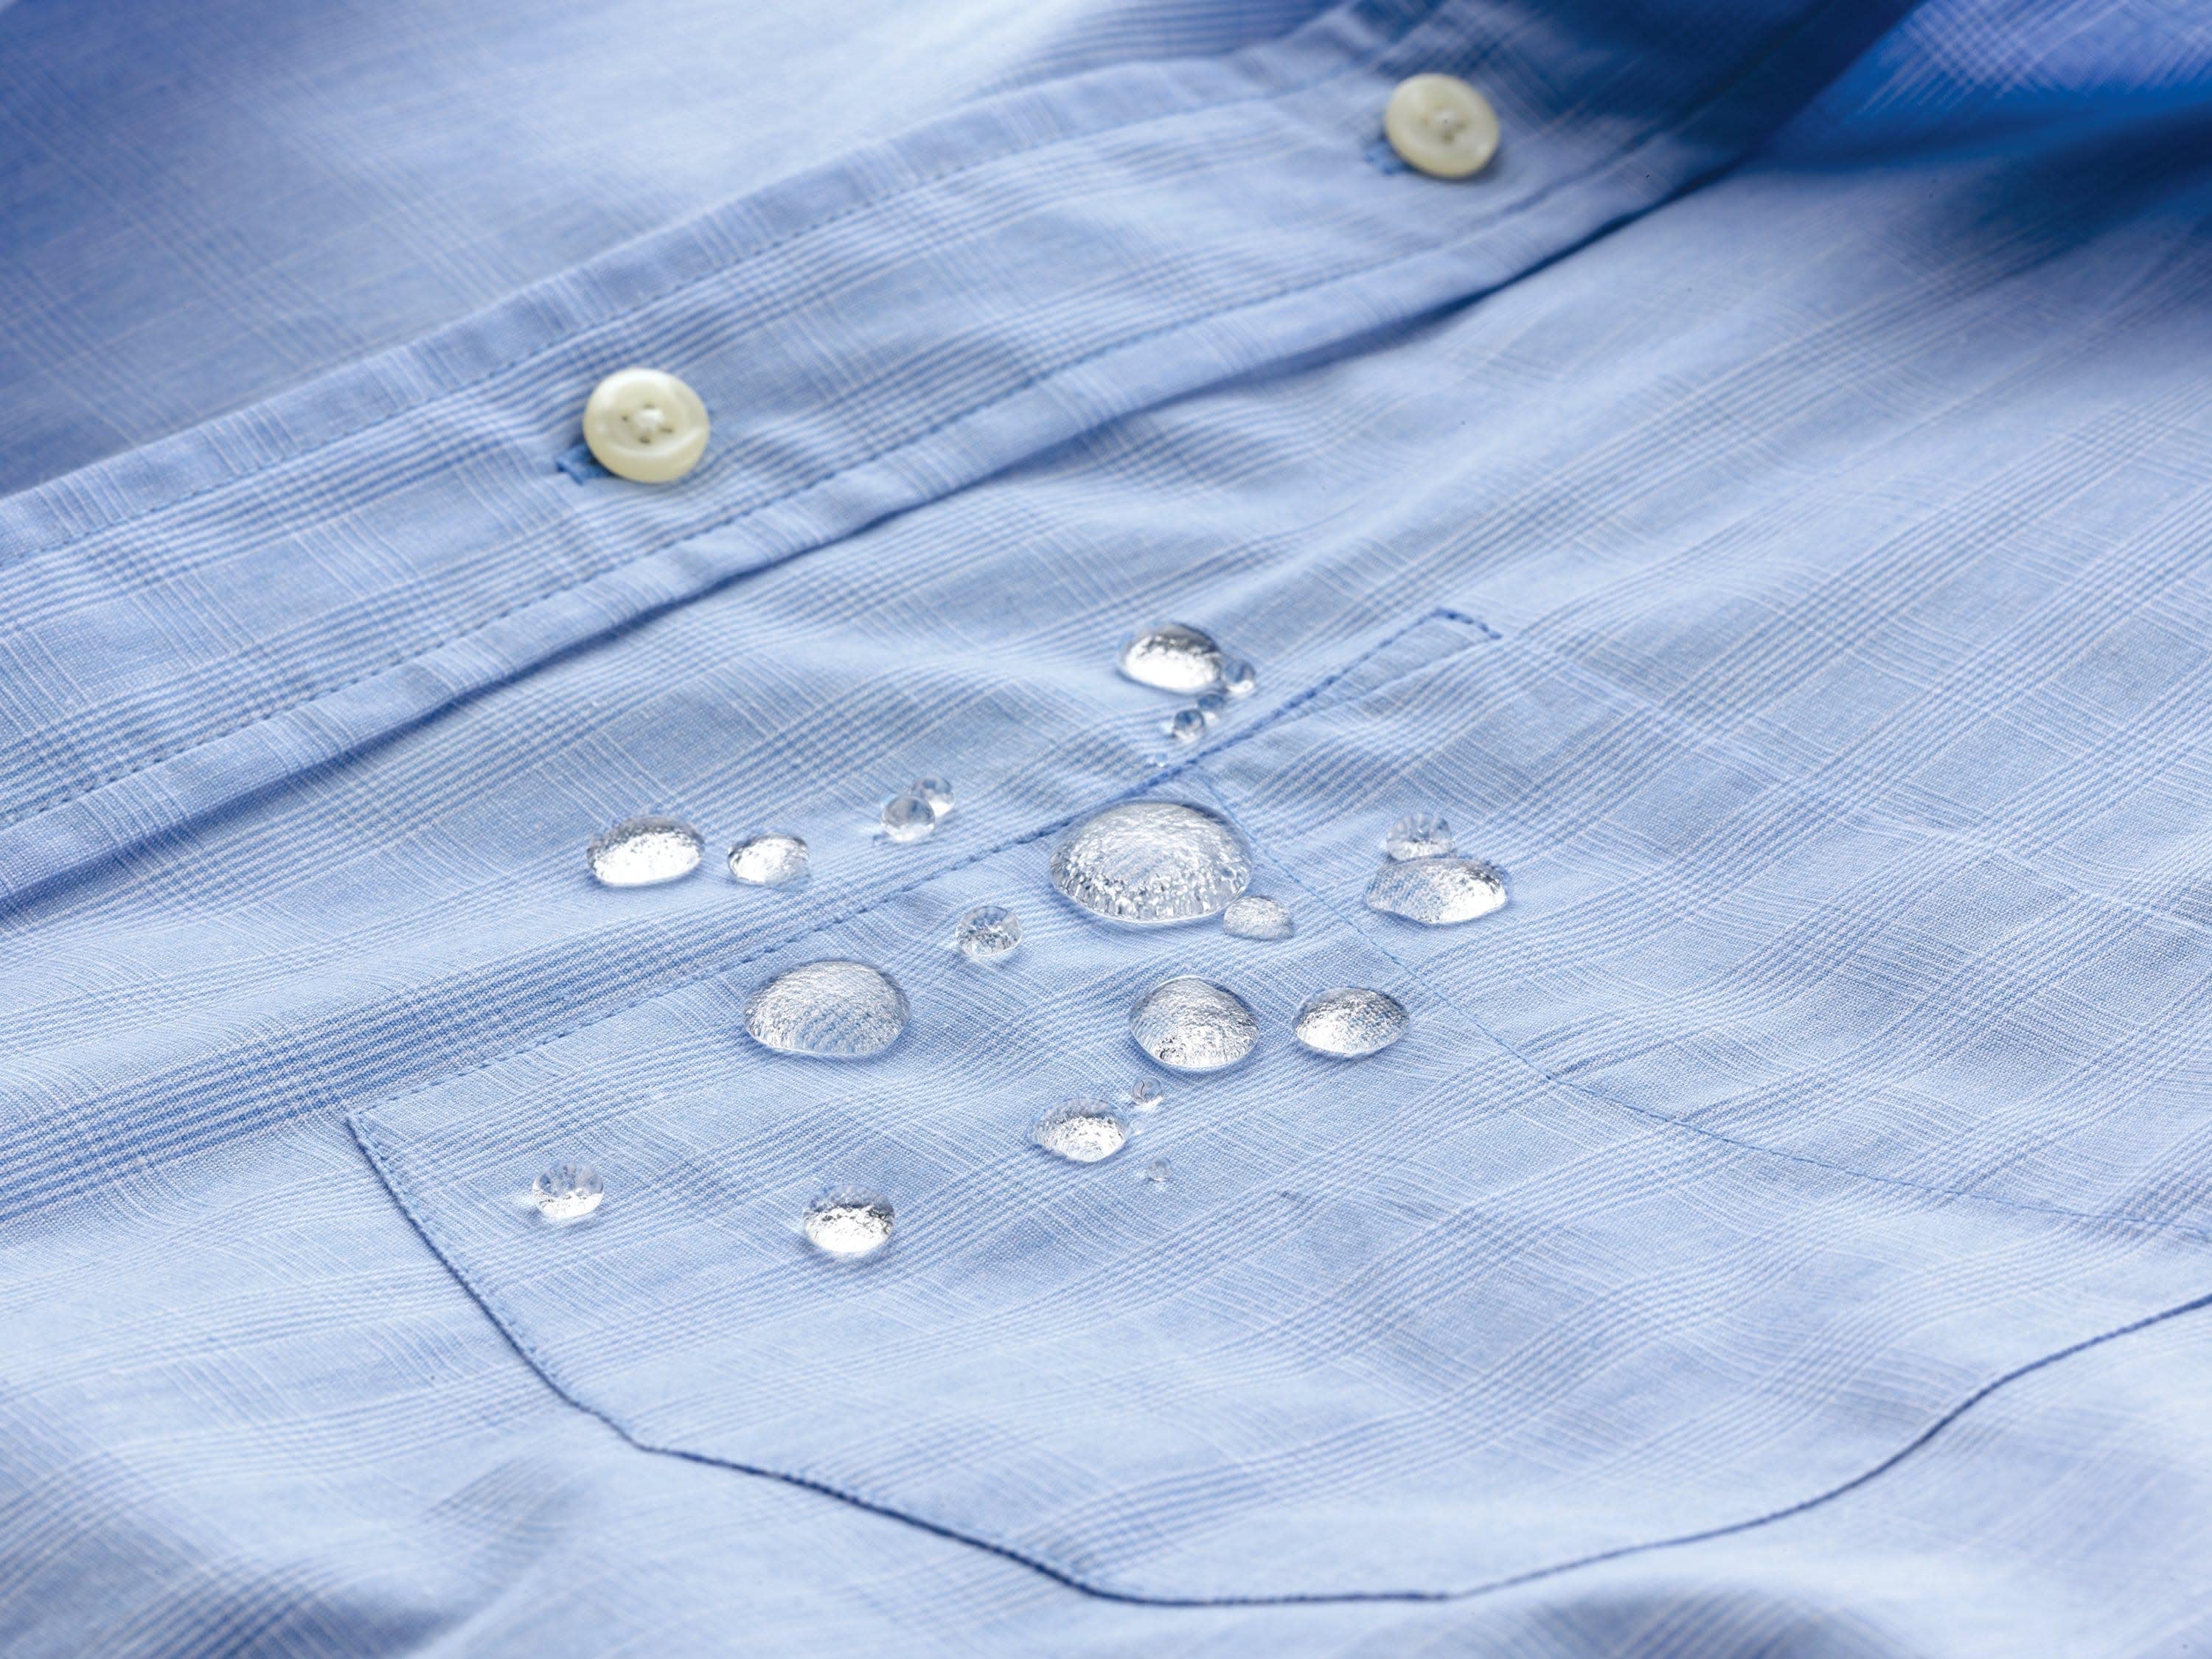 Scotchgard Fabric & Crafts Water Shield, 10 Ounce